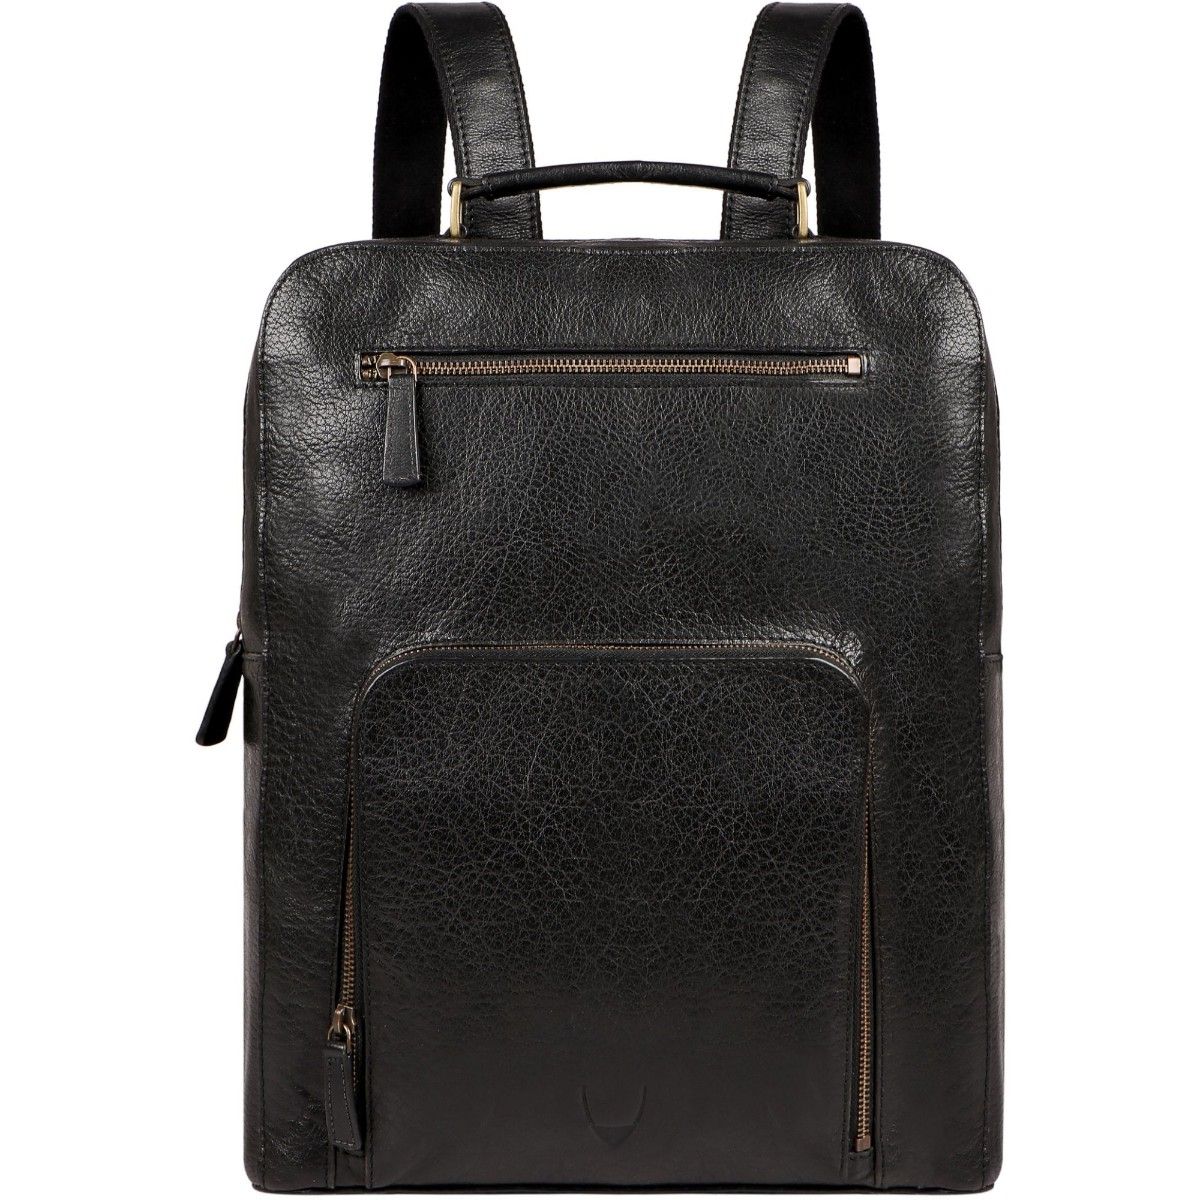 Hidesign Black Barcelona 03 Apache Backpack: Buy Hidesign Black ...